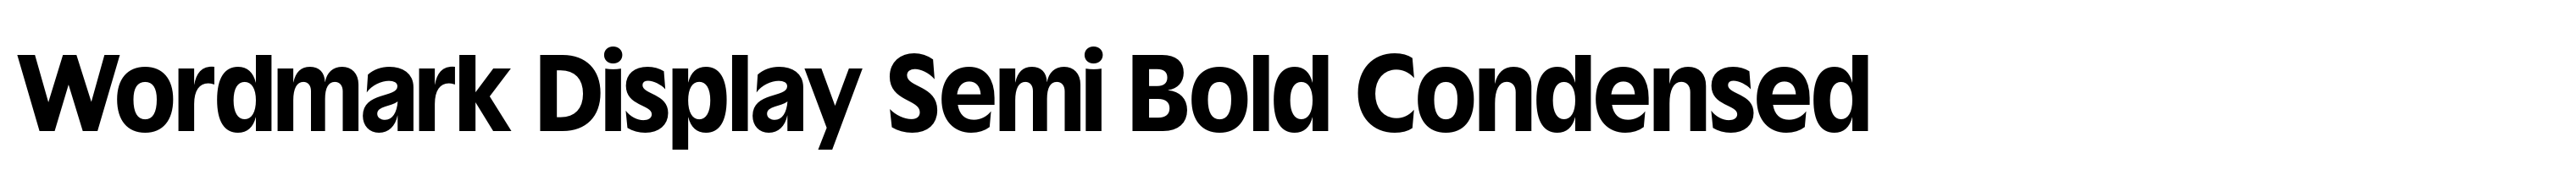 Wordmark Display Semi Bold Condensed